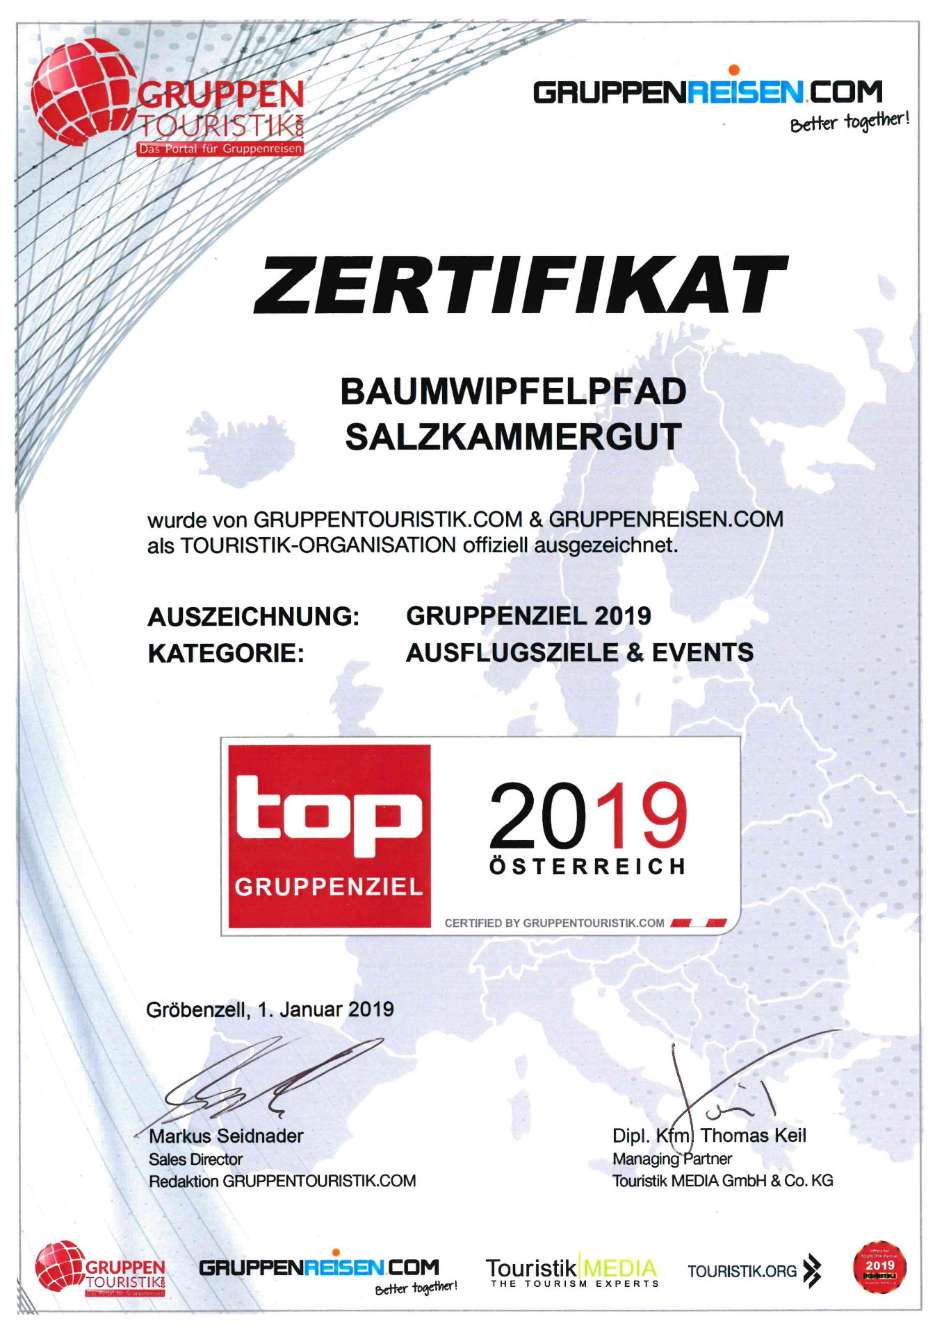 The Salzkammergut treetop path as top group destination 2019